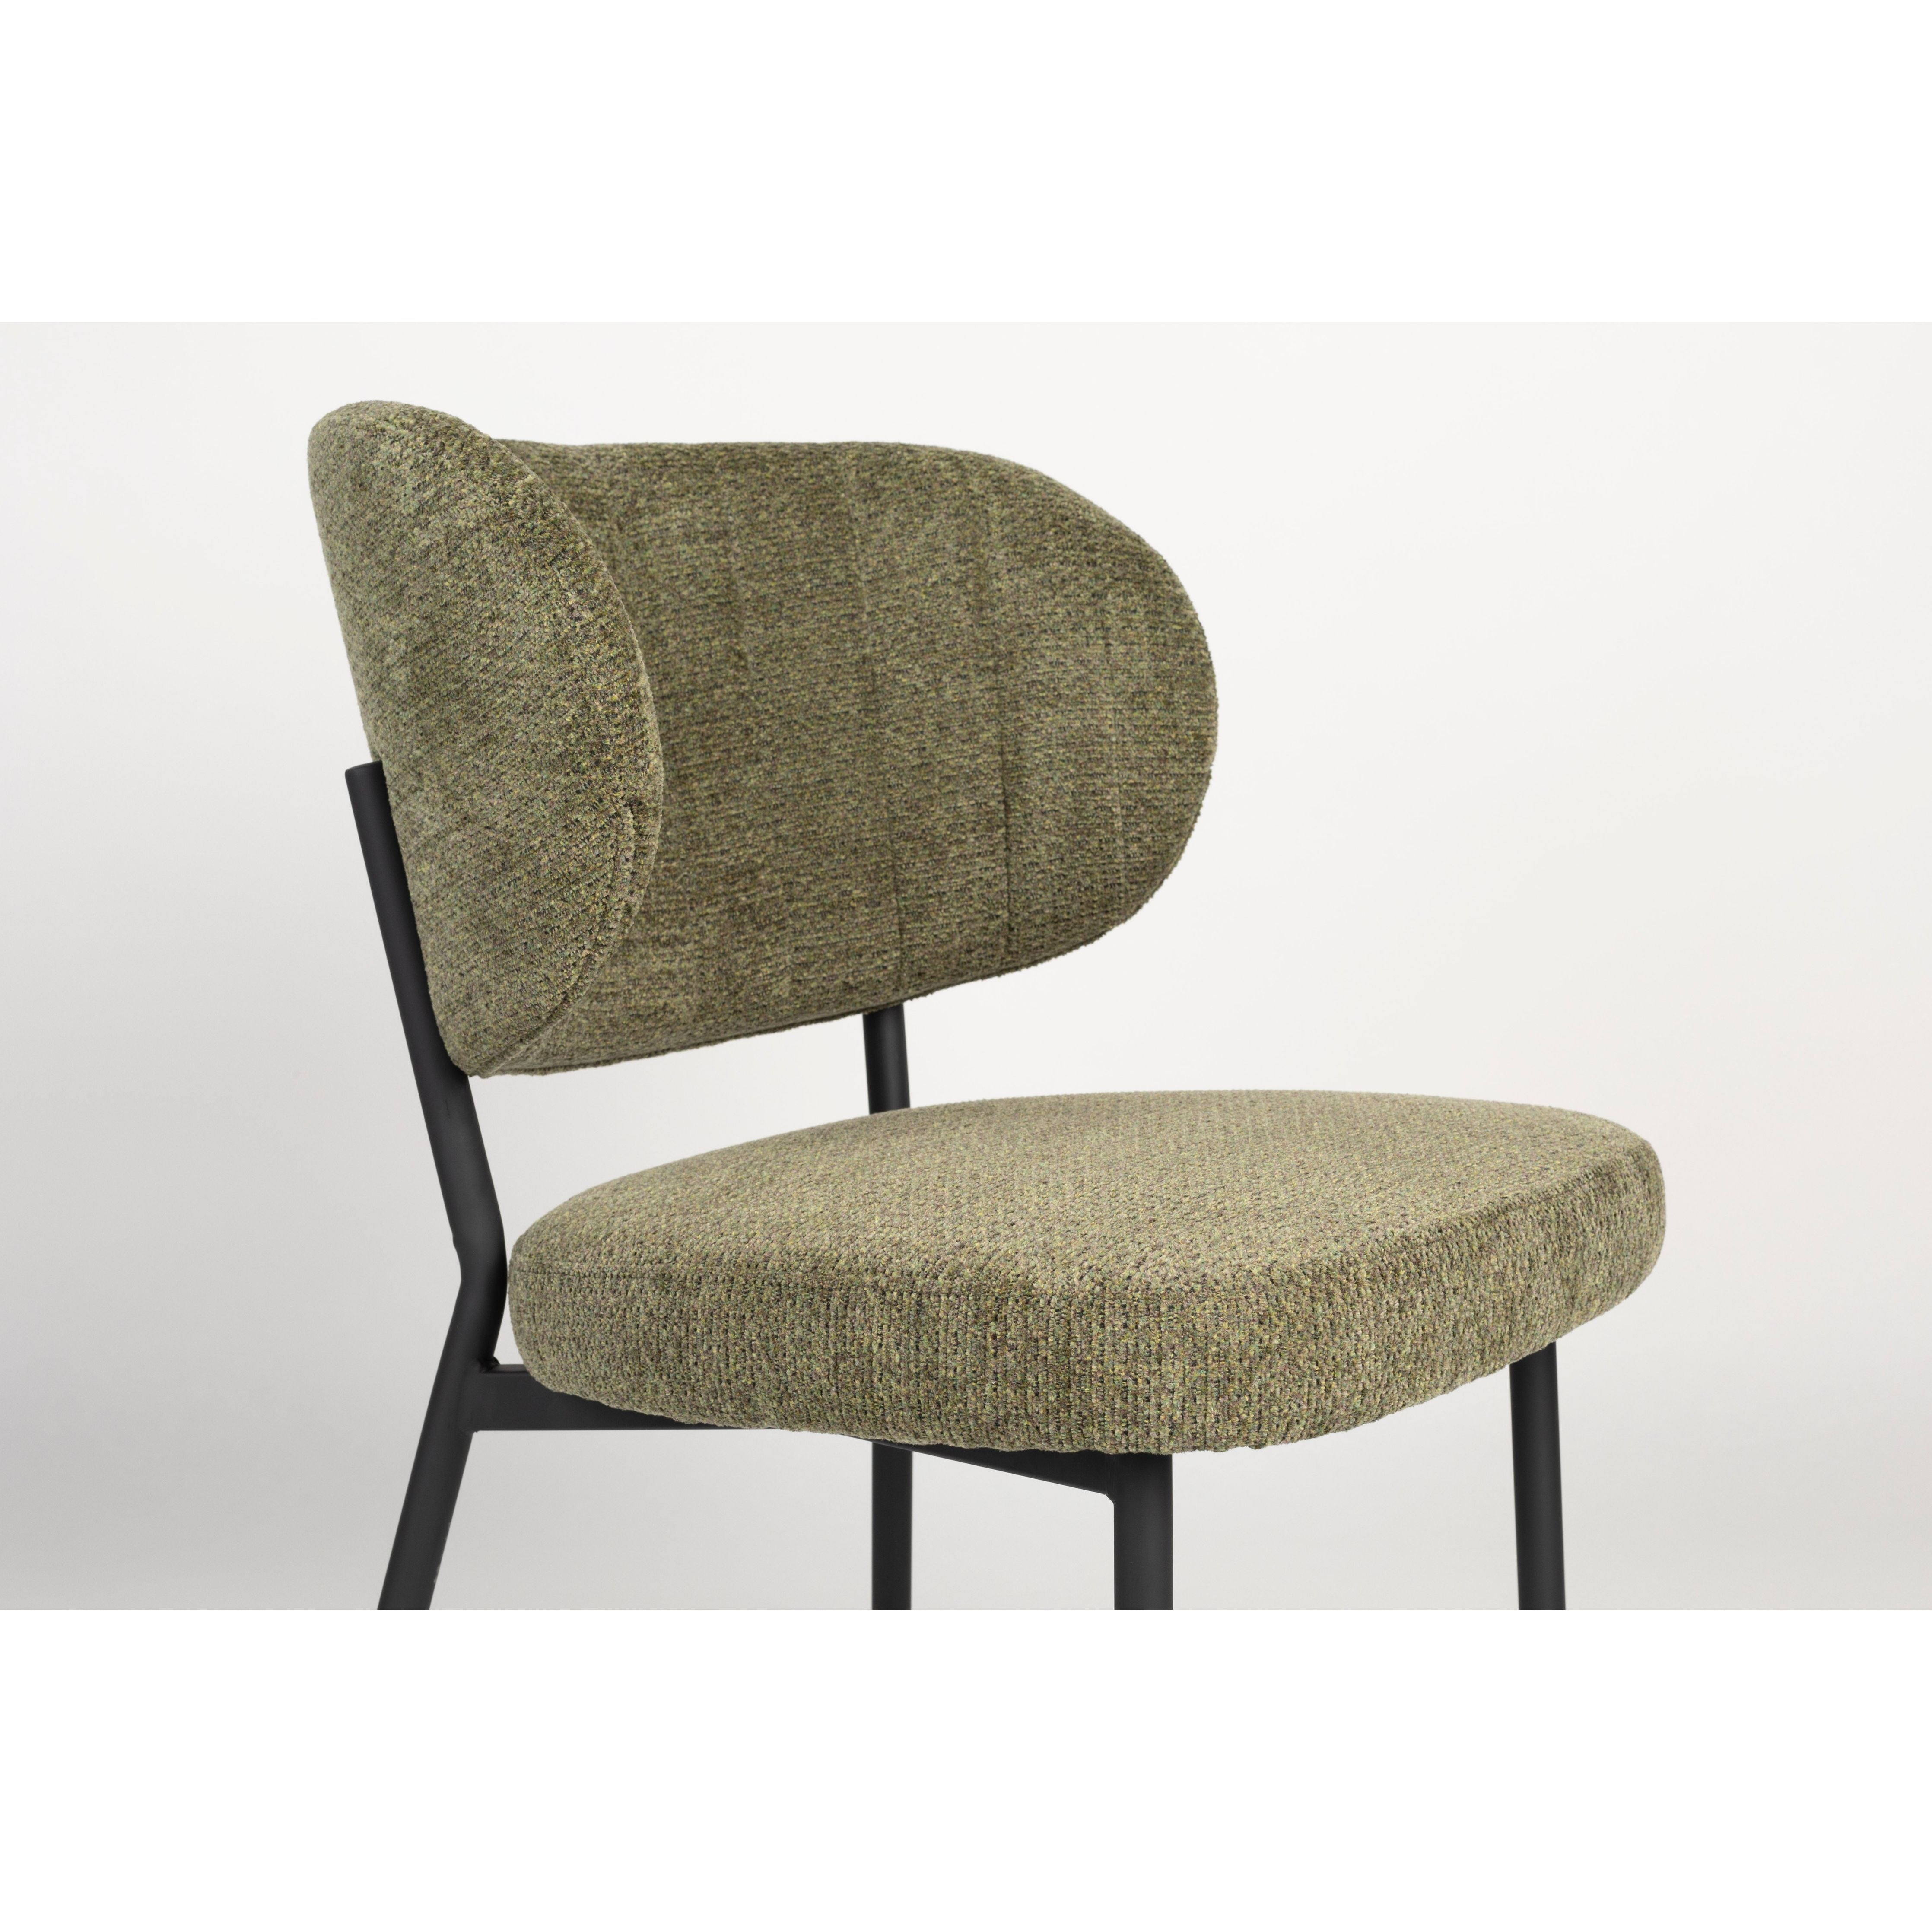 Chair sanne green gray | 2 pieces